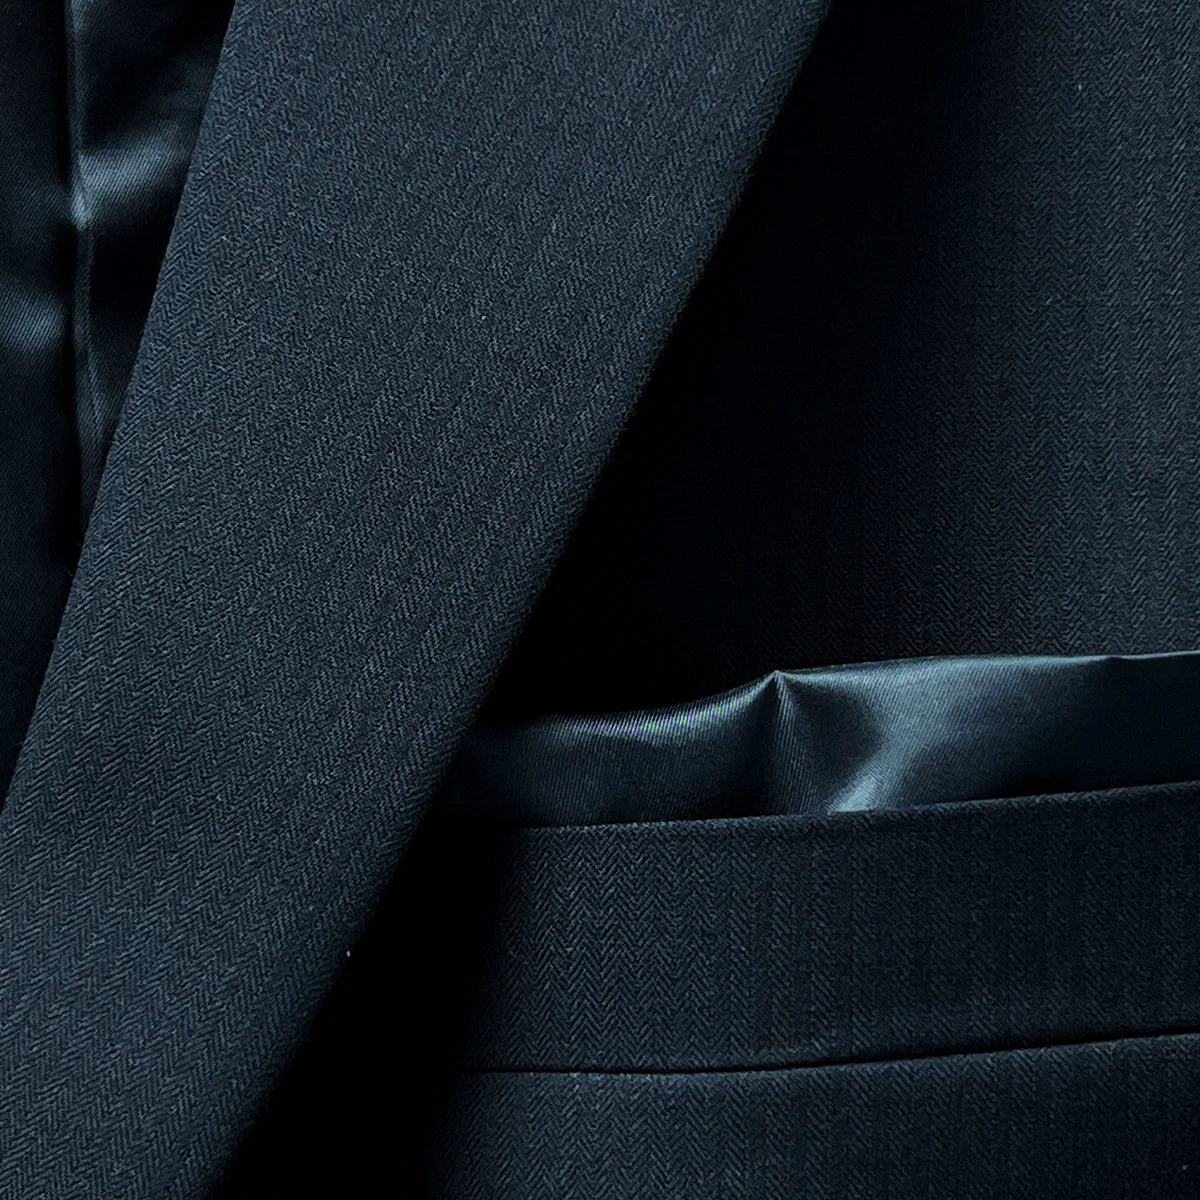 Stylish pocket square complementing a black herringbone blazer.